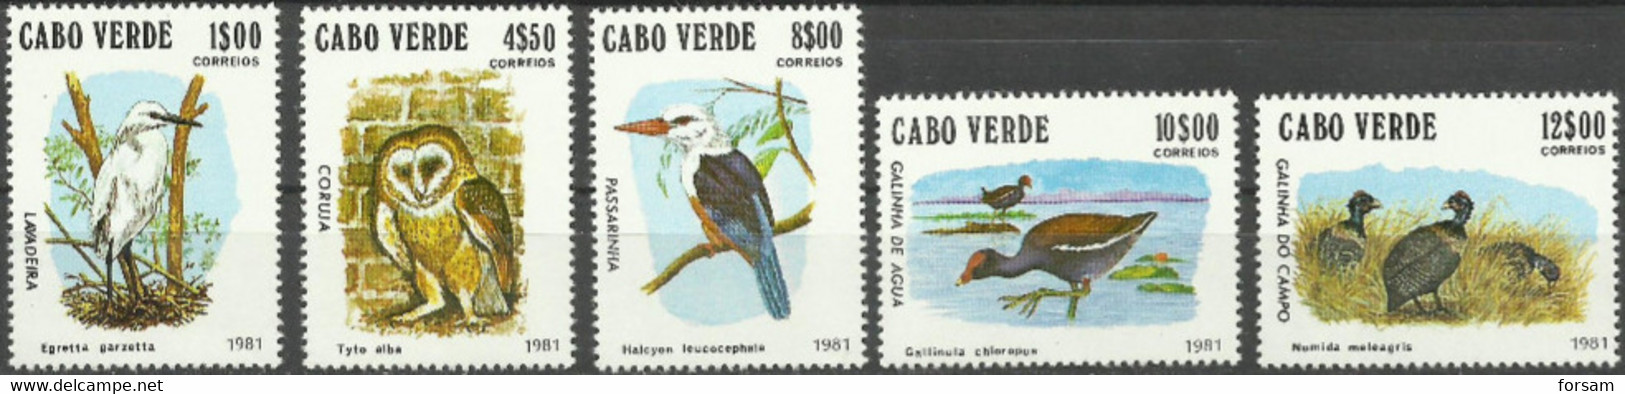 CAPE VERDE..1981..Michel # 445-449...MNH...MiCV - 12 Euro. - Cape Verde